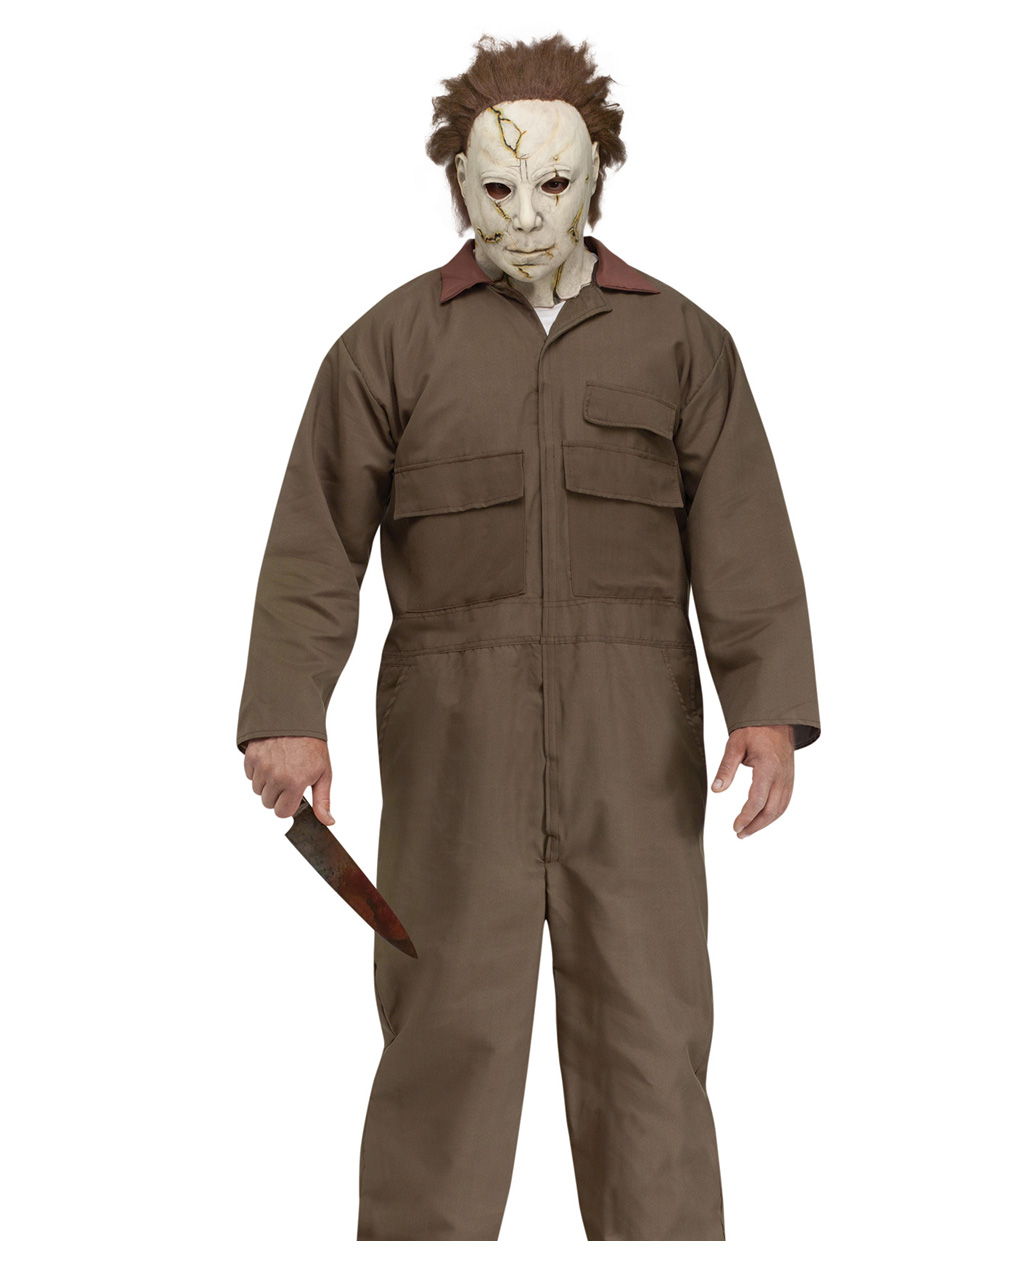 Michael Myers Kostüm mit Maske aus Halloween One Size